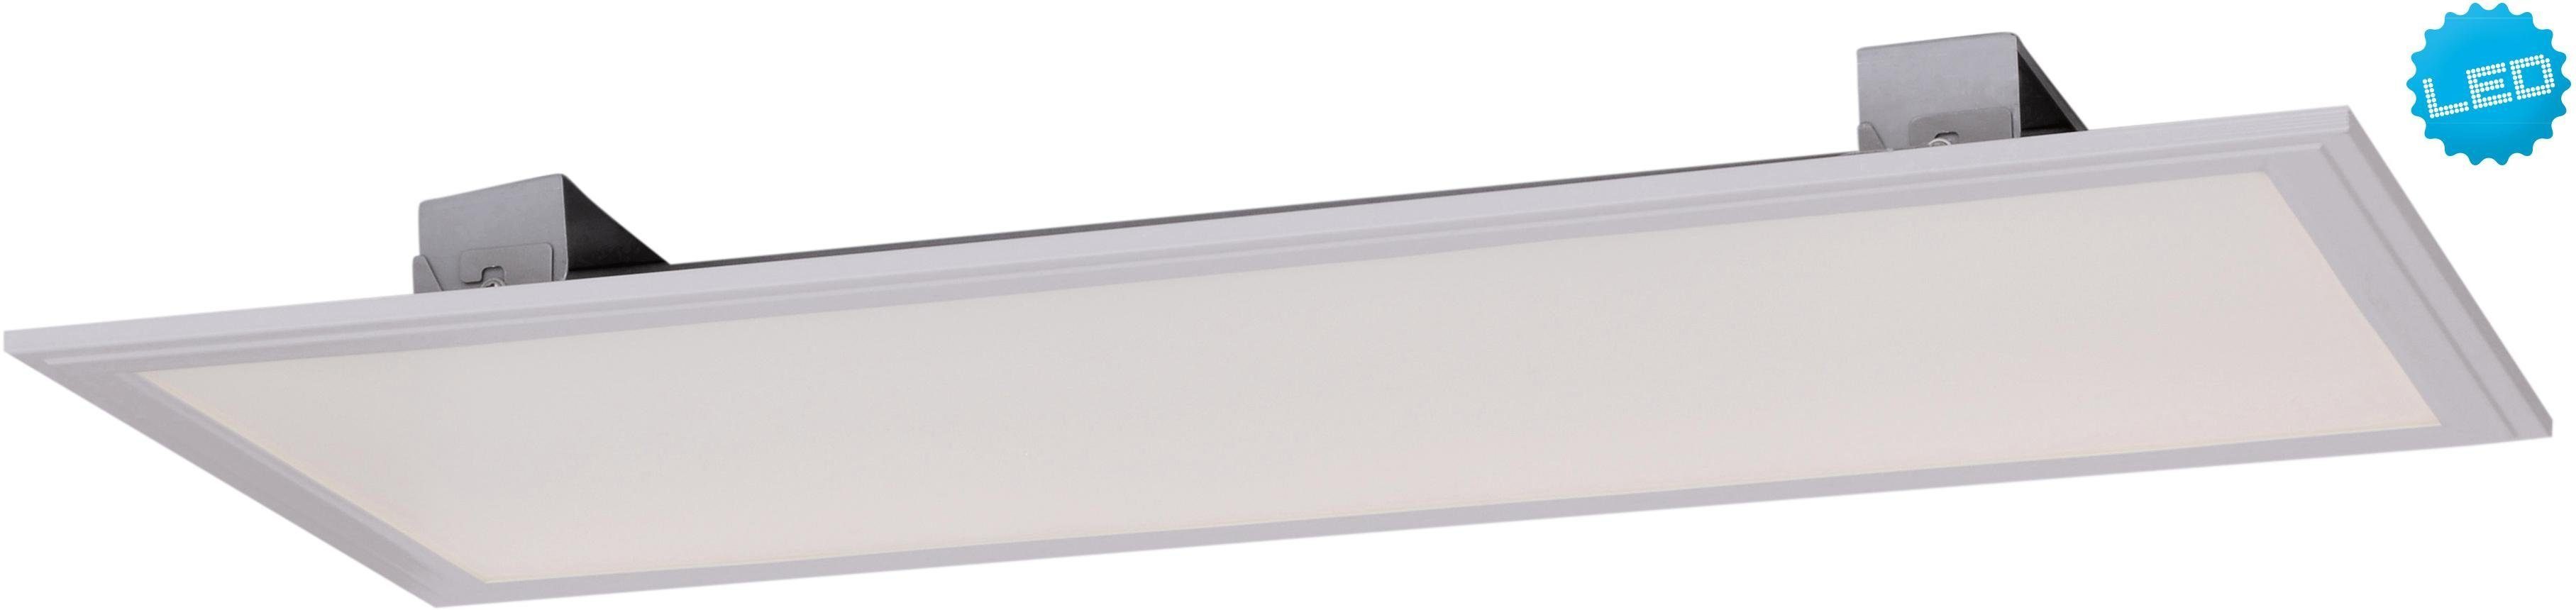 inkl. fest LED 30x60cm LED´s "Sorriso", total Neutralweiß, 4000K; Sorriso, Aufbaupanel integriert, Deckenleuchte LED 1600lm näve 96 18W